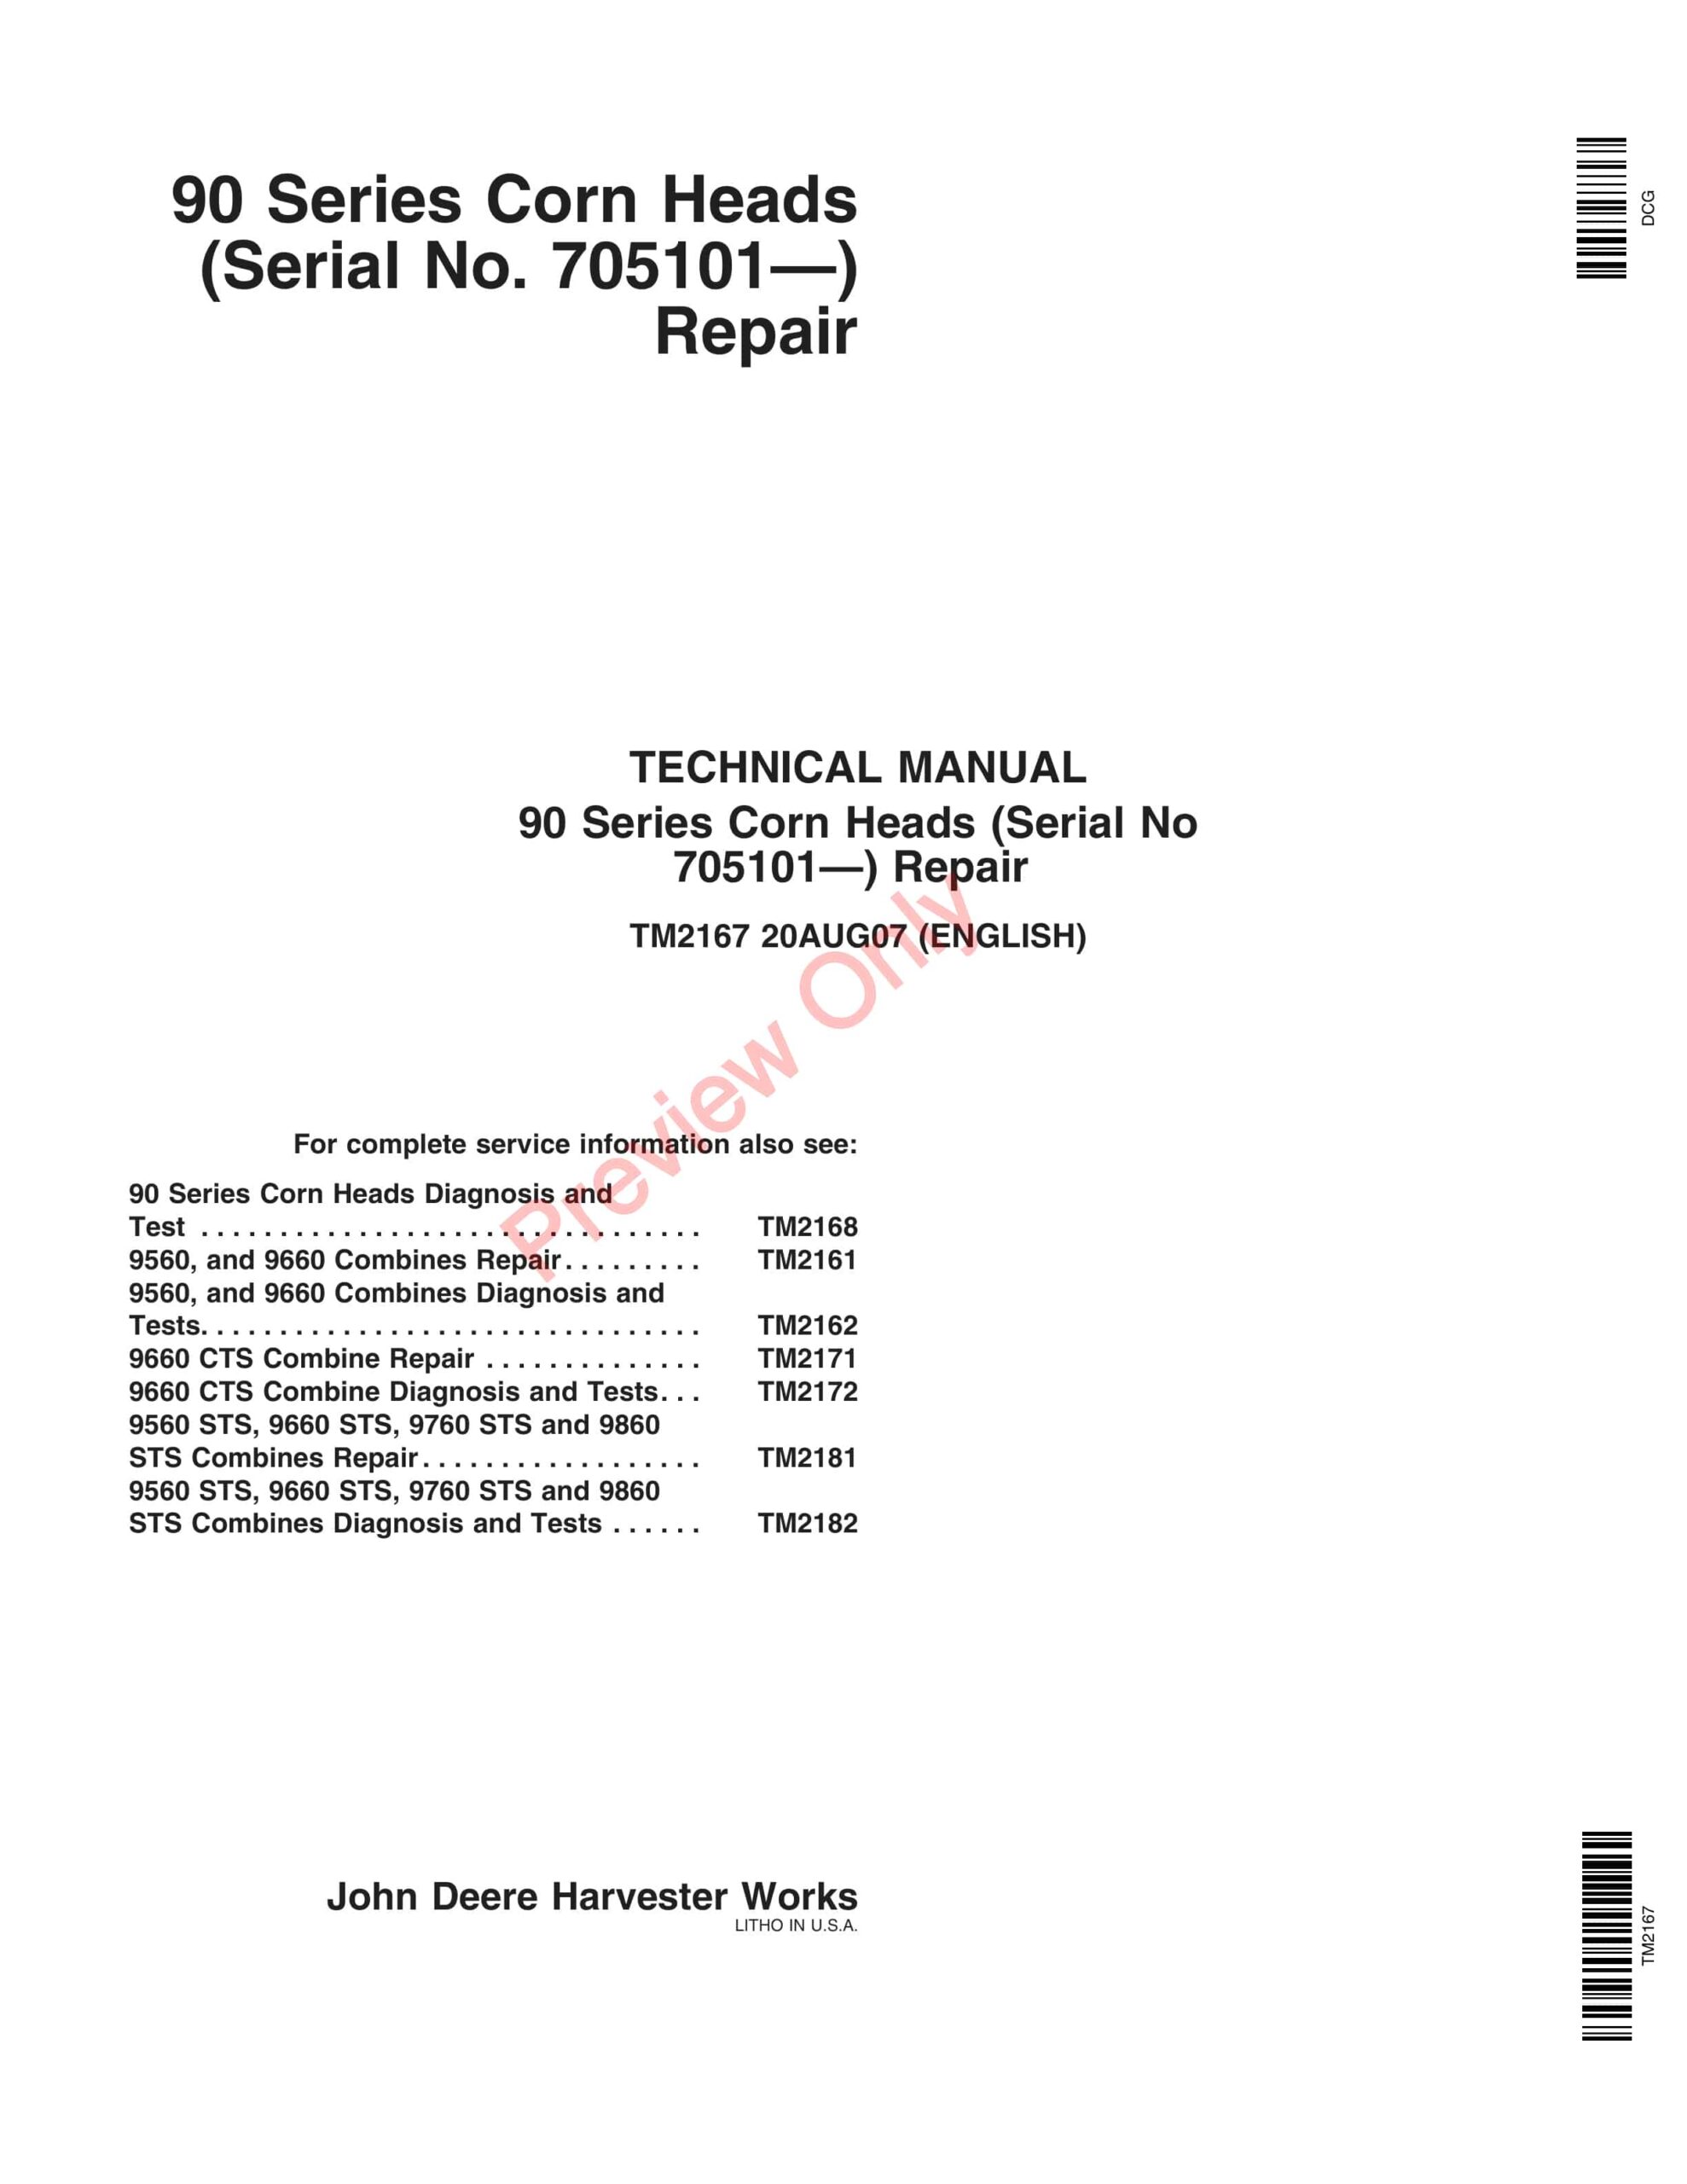 John Deere 90 Series Corn Heads – (705101-) Technical Manual TM2167 20AUG07-1